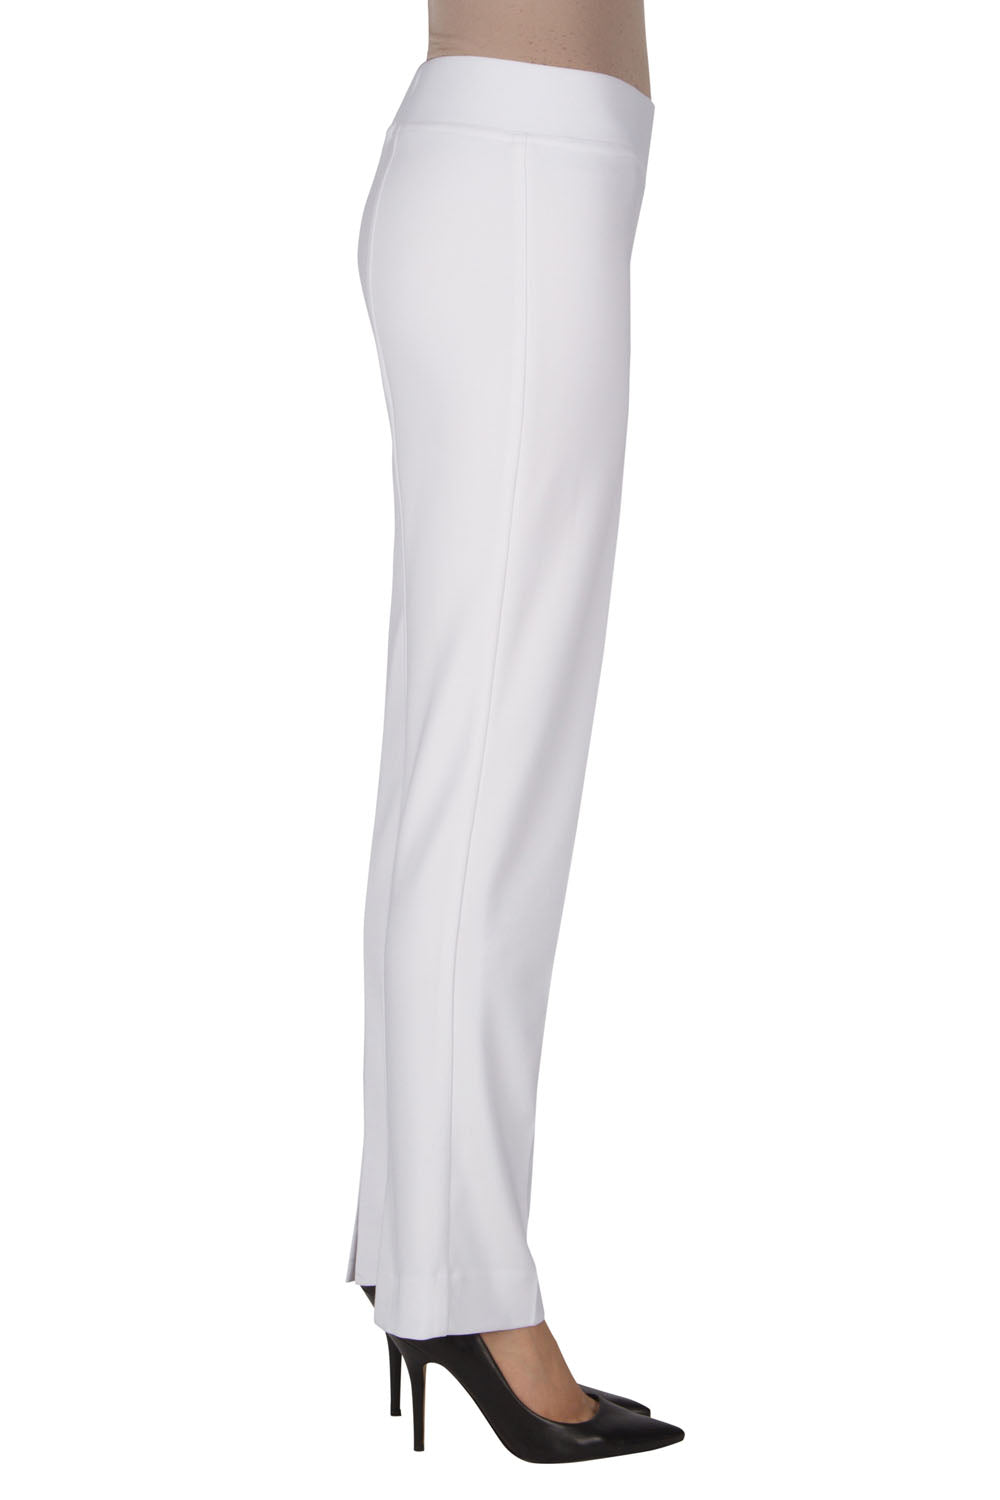 Joseph Ribkoff Vanilla Cropped Pants Style C143105